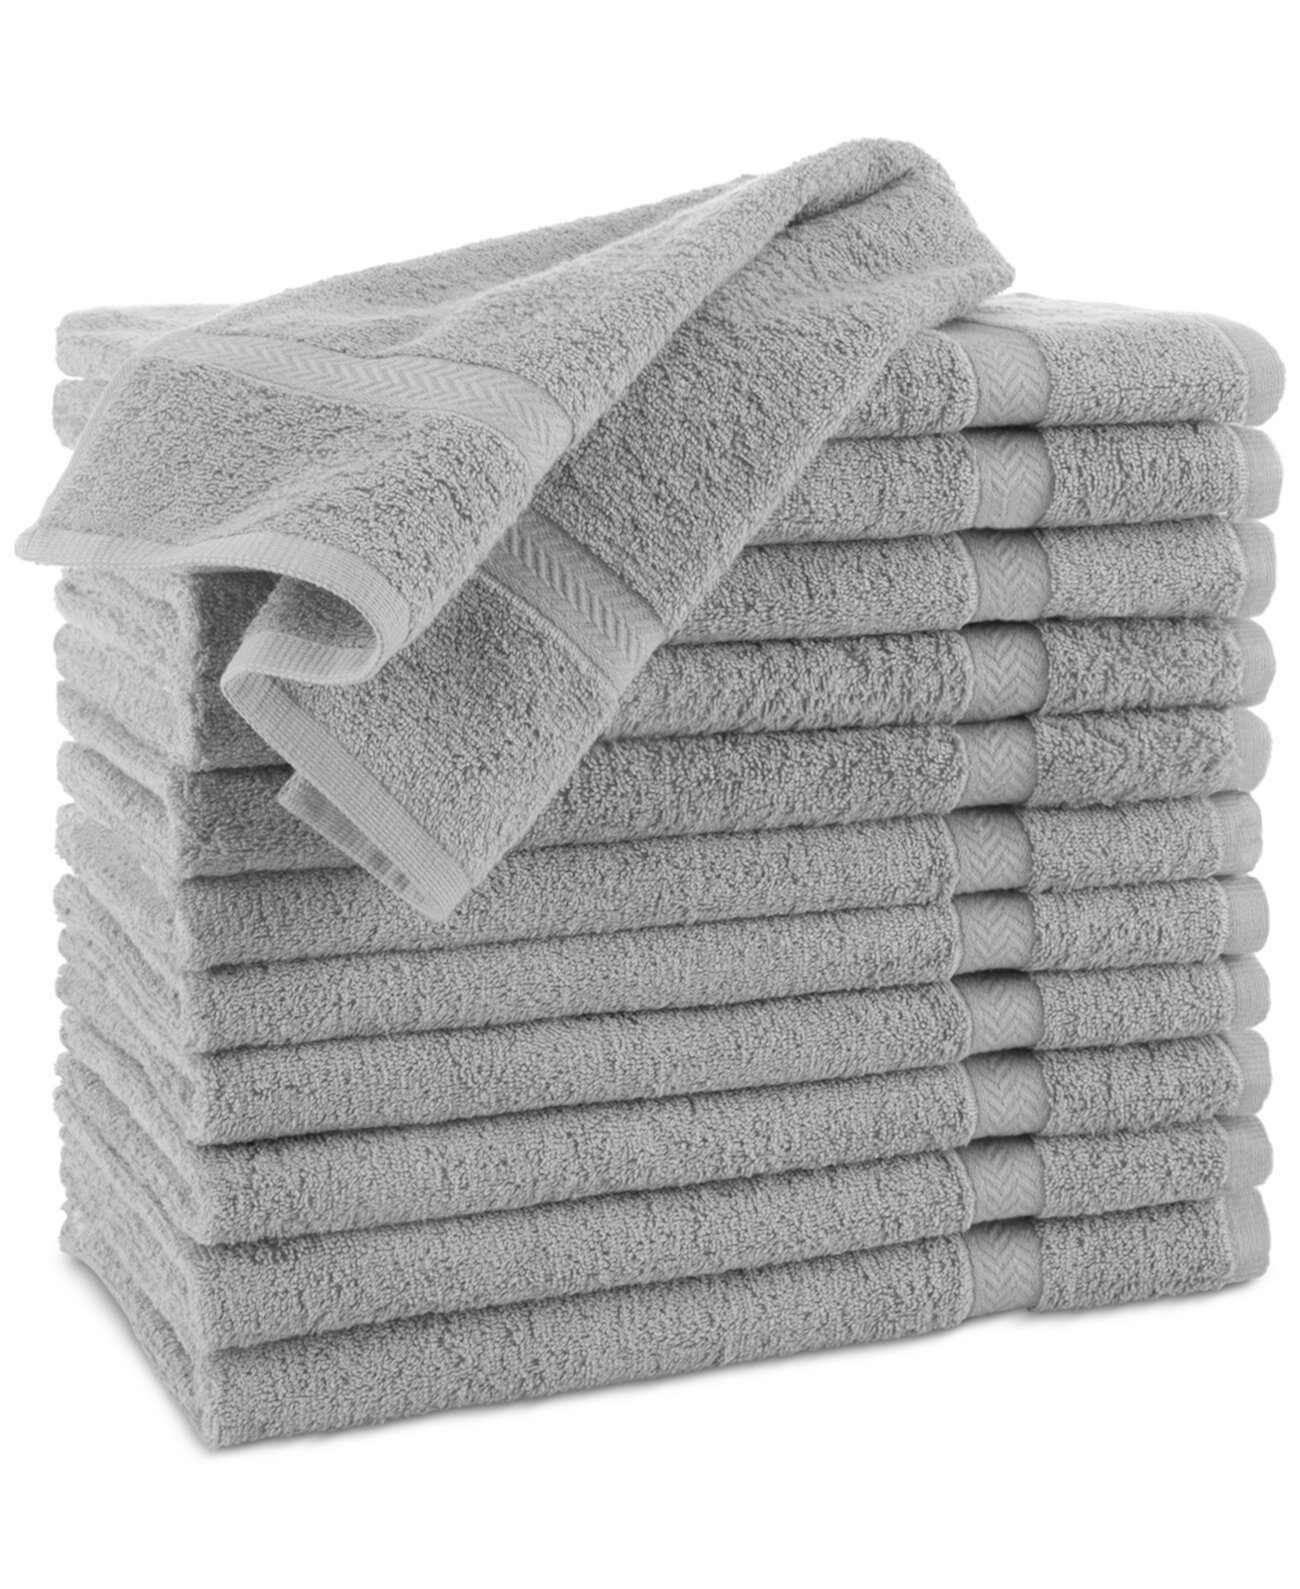 Набор полотенец для рук. Твердое полотенце. Полотенце 12. Pn08848b полотенце. Натуральные полотенца